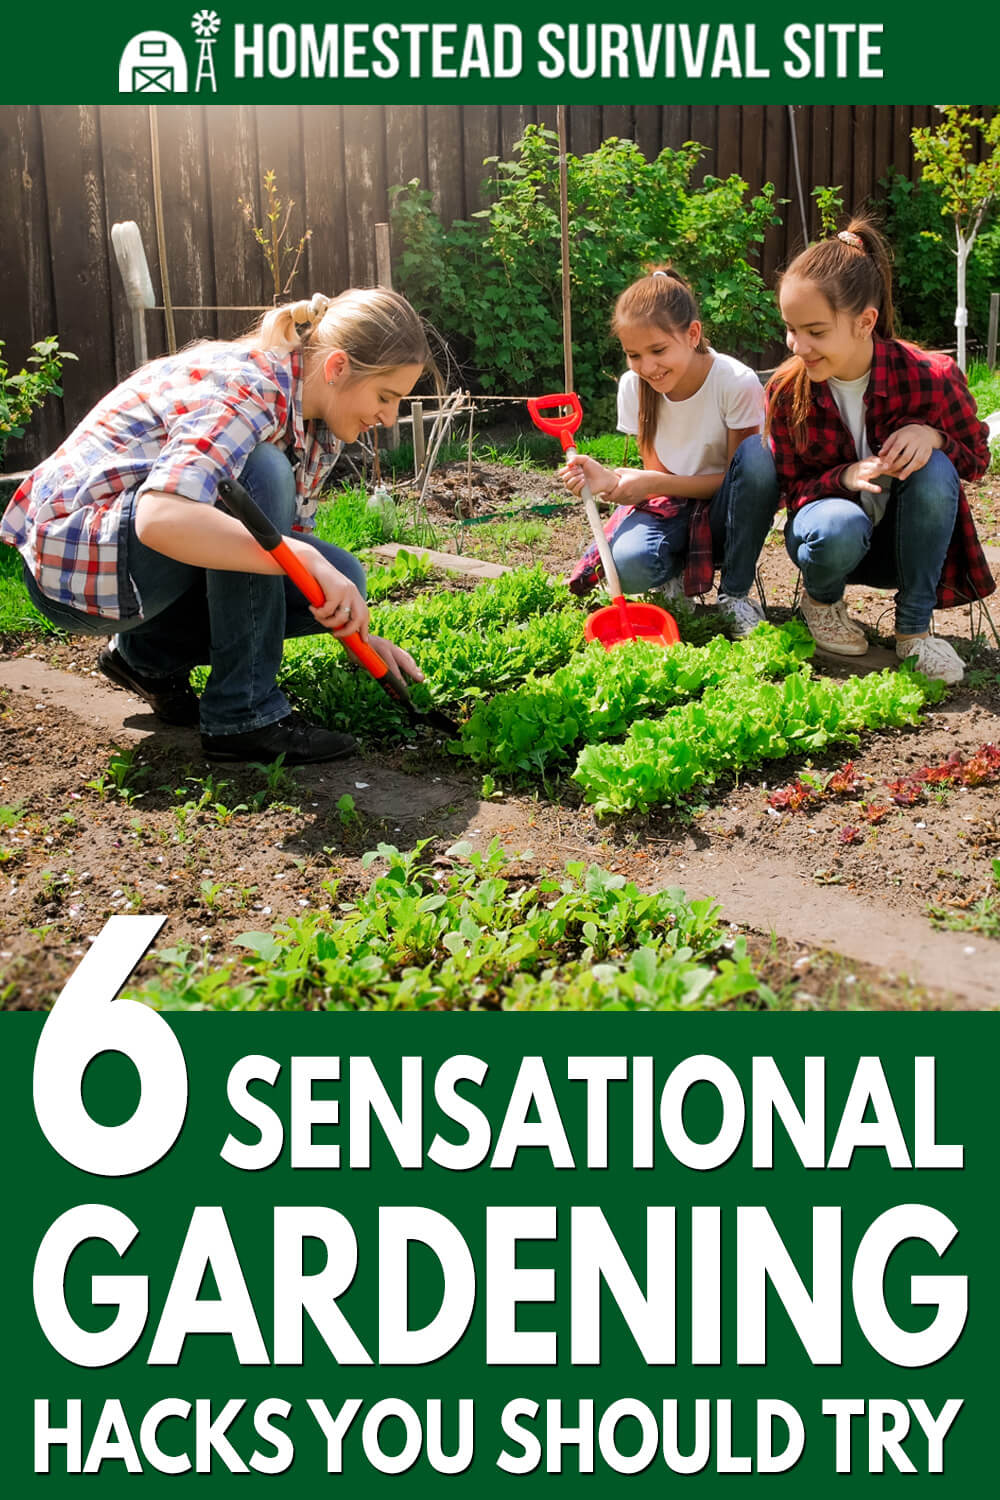 6 Sensational Gardening Hacks You Should Try